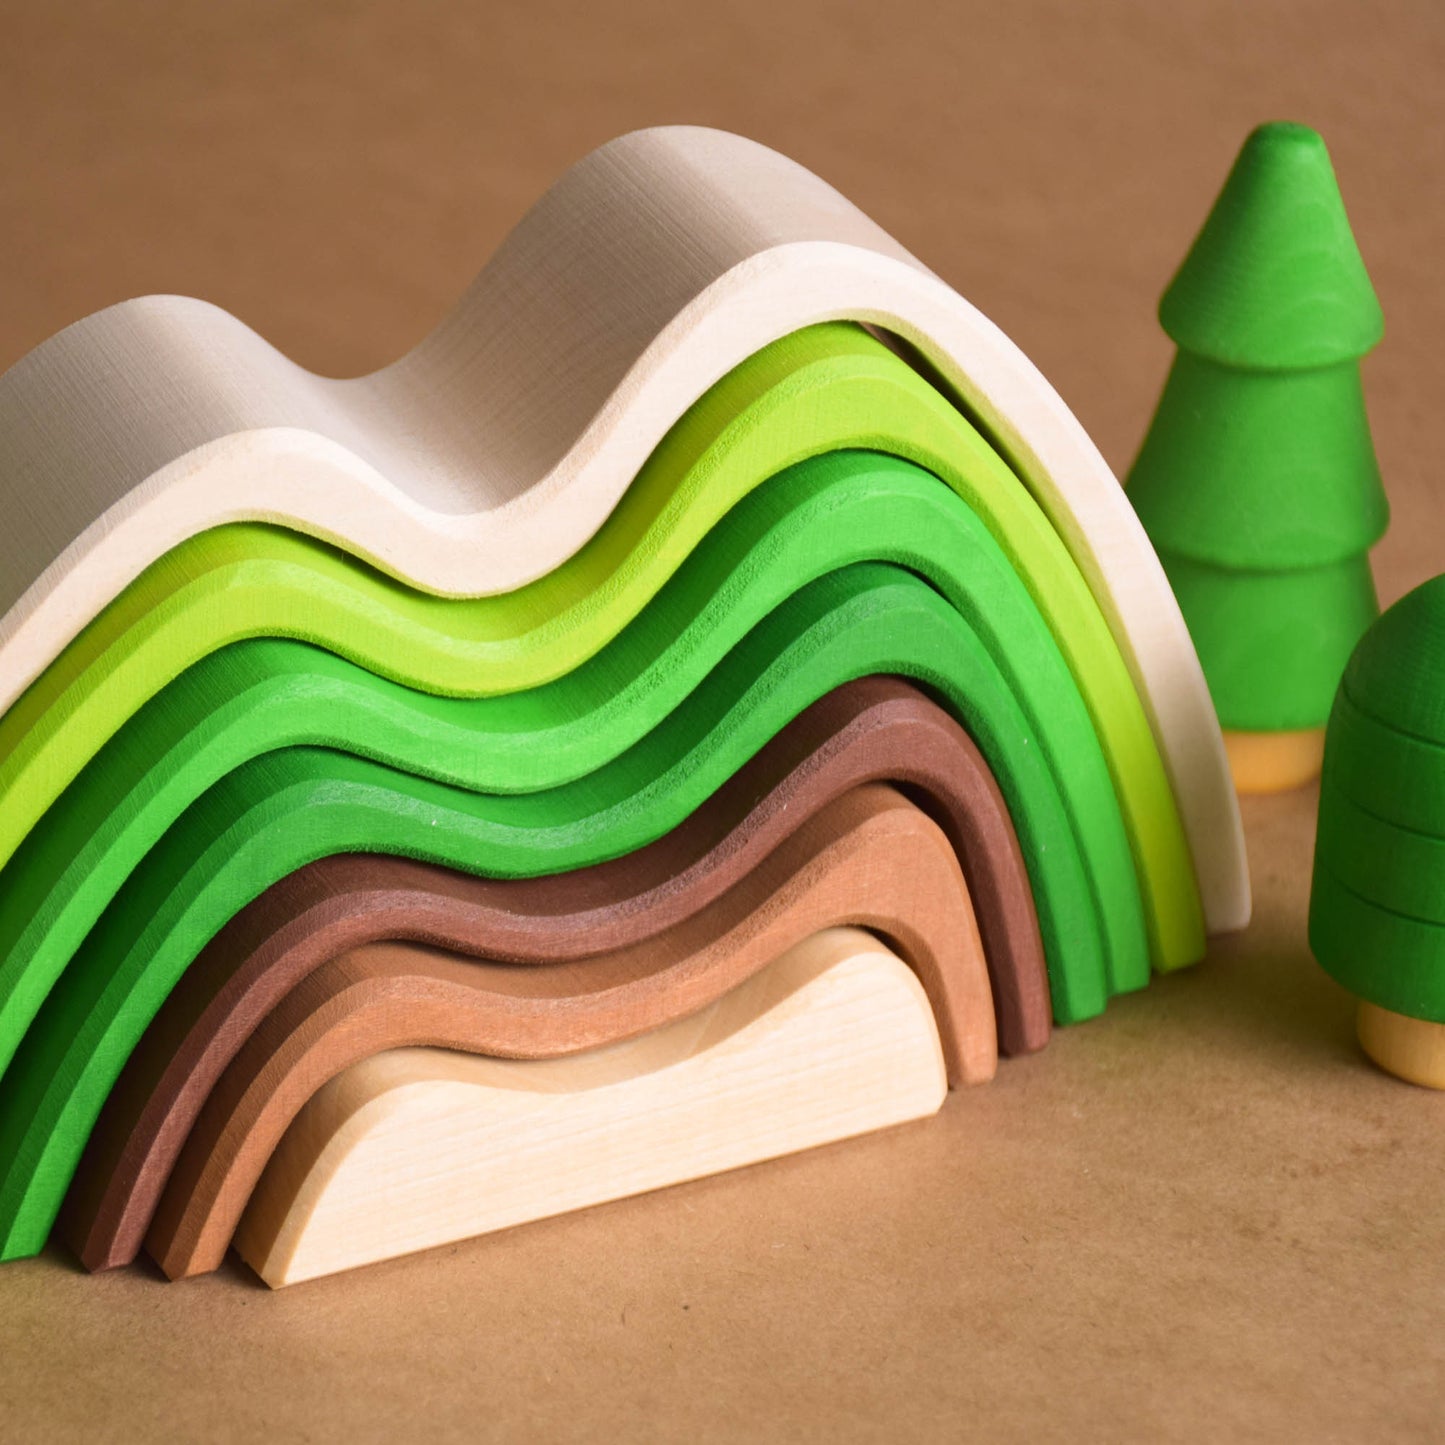 Wooden Mountains Stacker Montessori Puzzle Toy